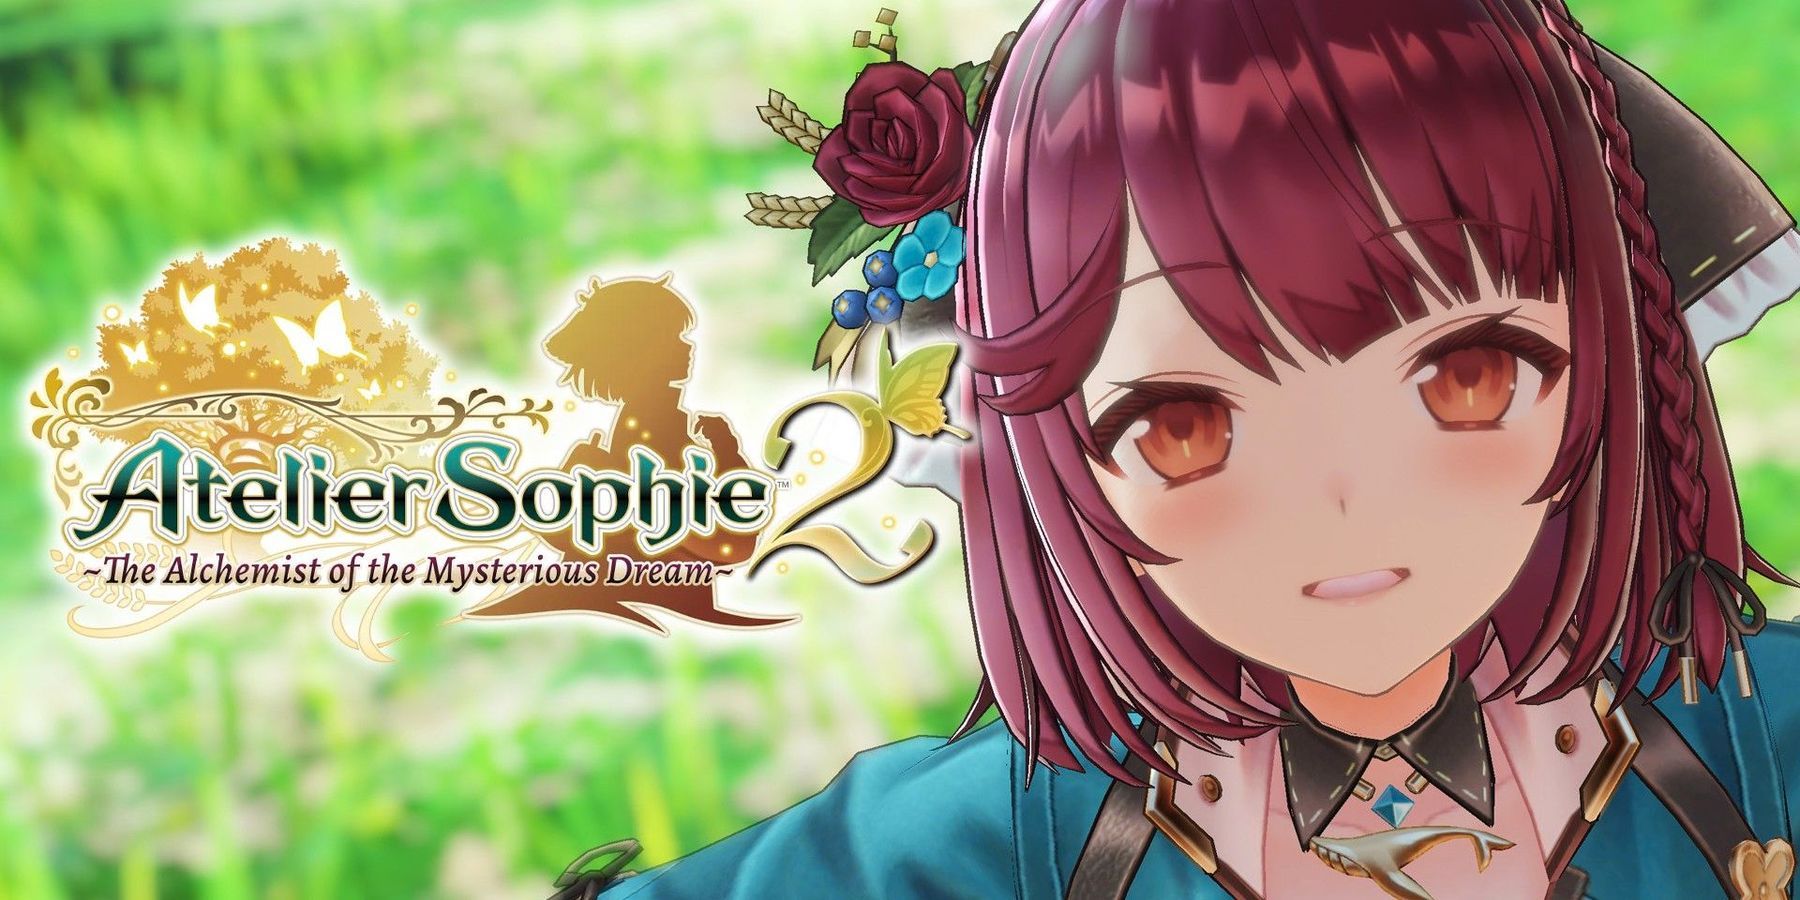 تم الإعلان رسميًا عن Atelier Sophie 2 بواسطة Koei Tecmo مع إصدار فبراير 2022